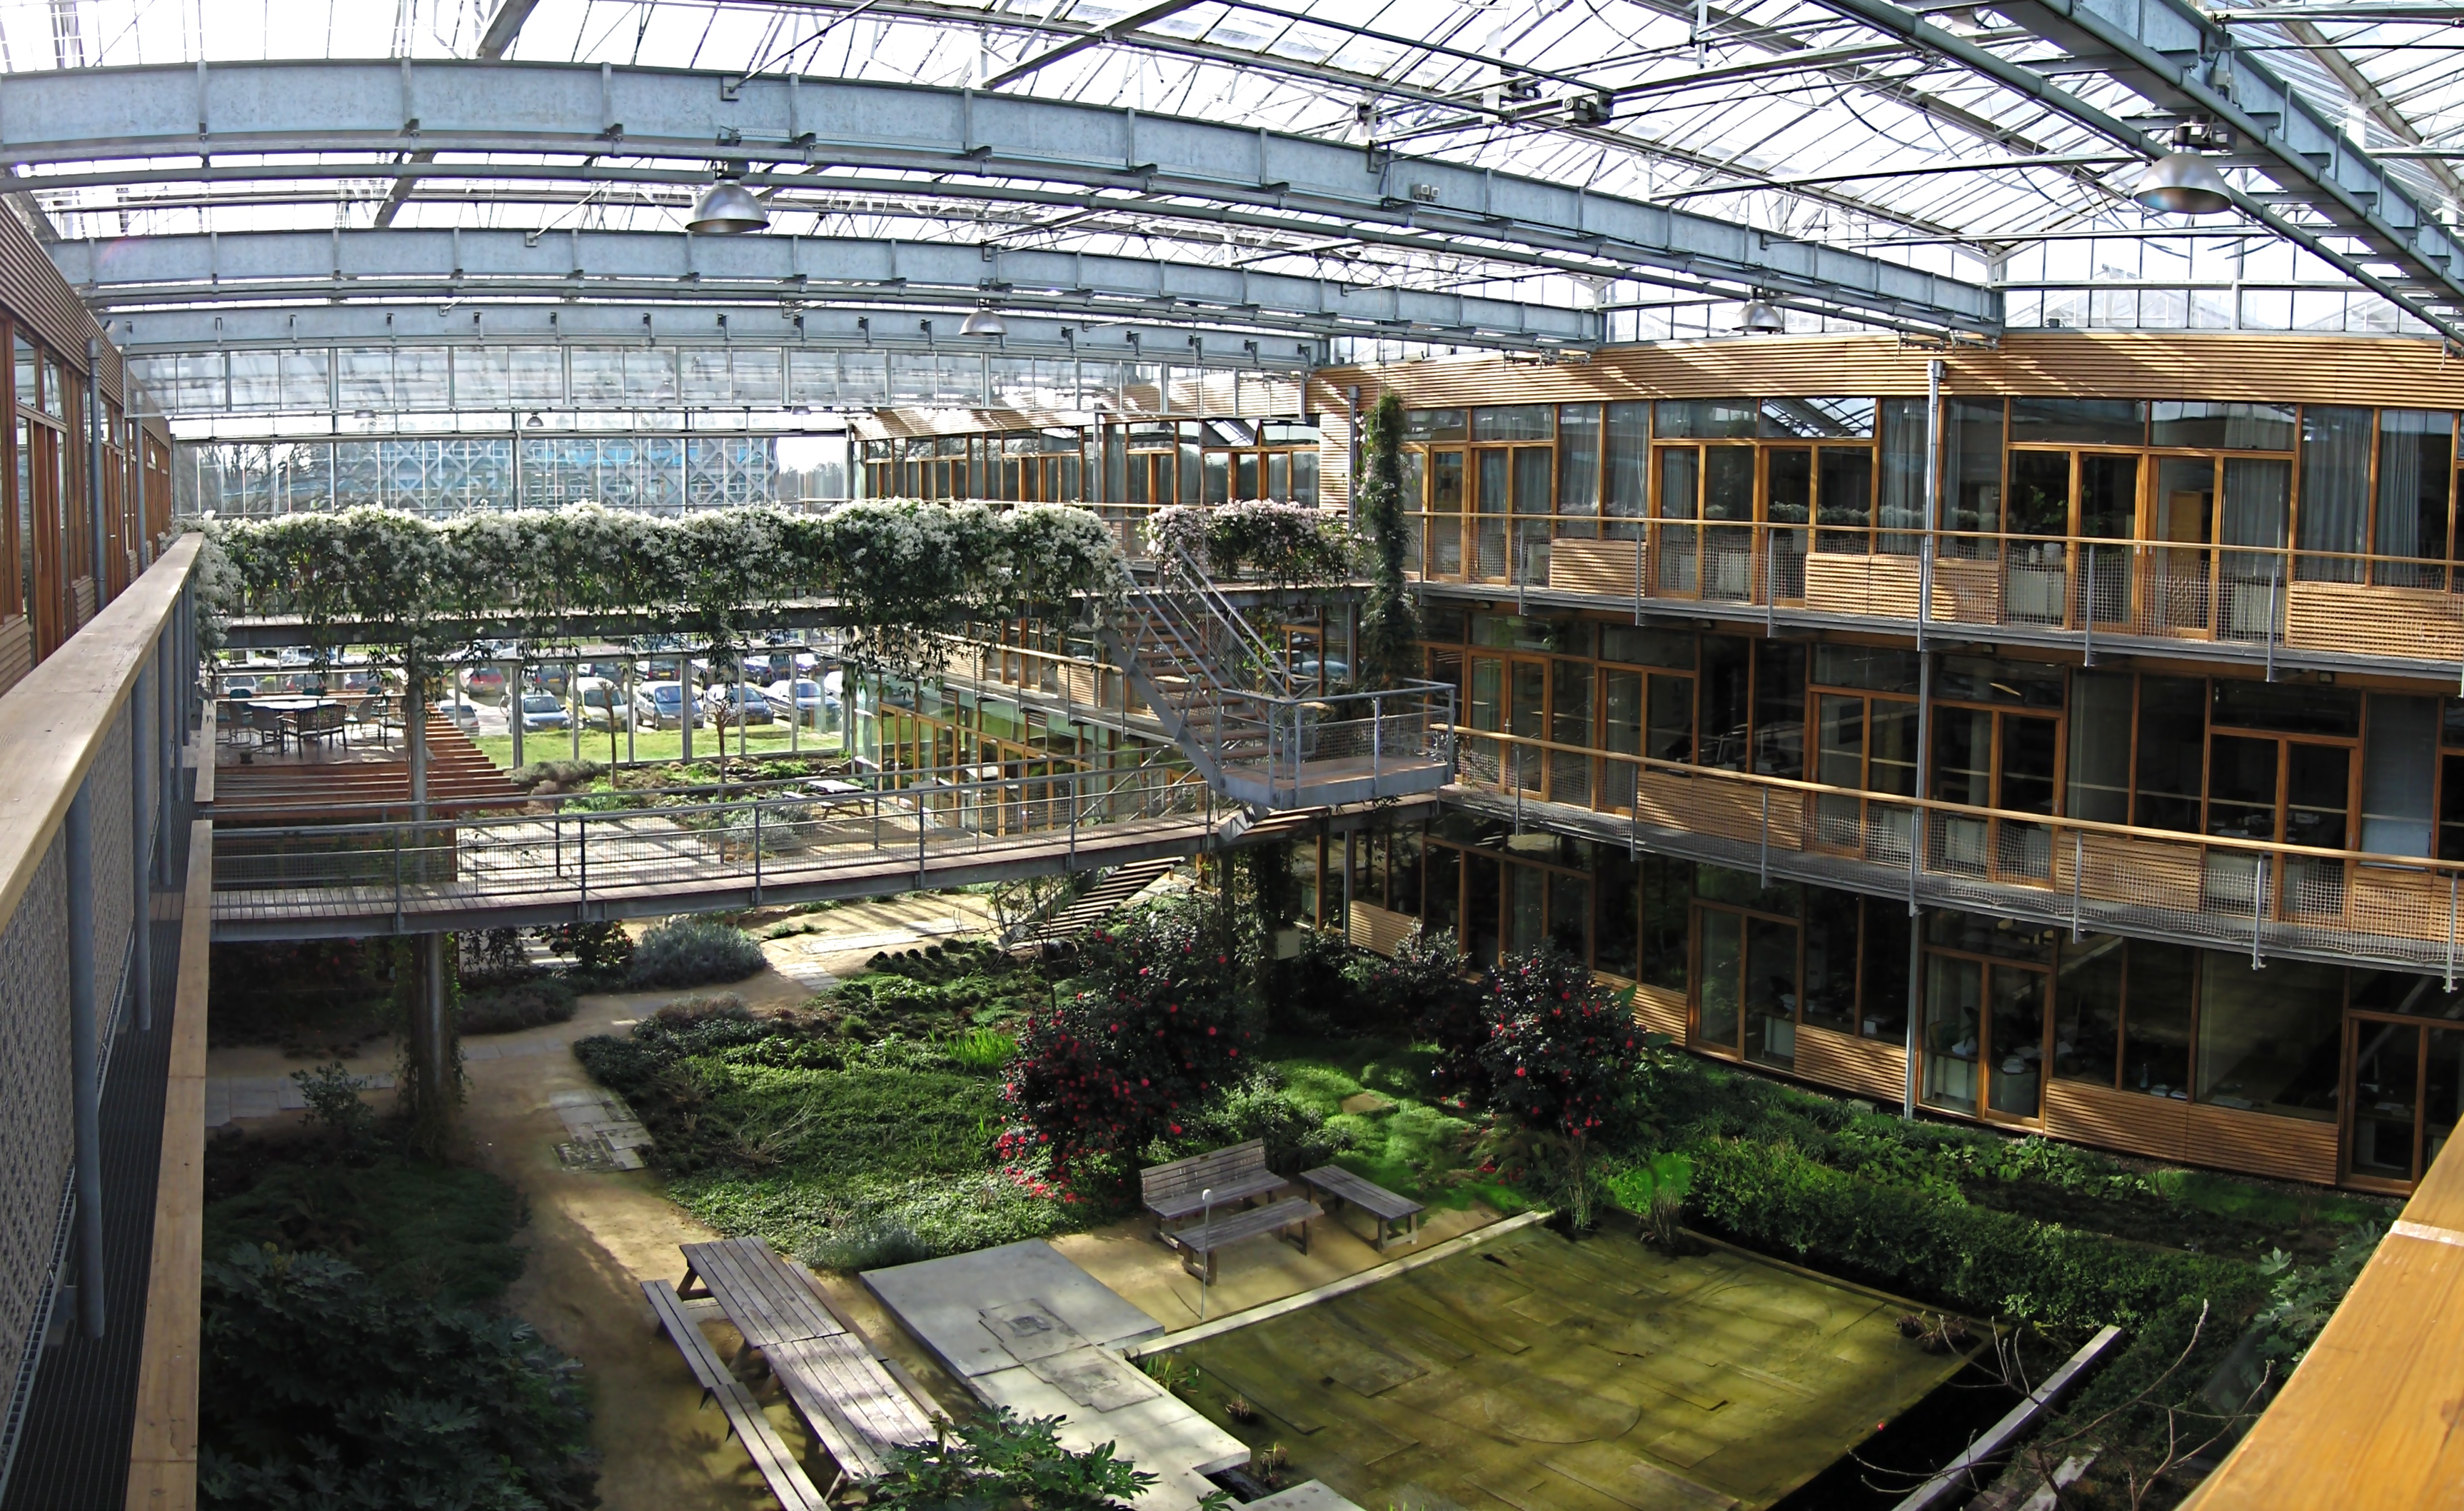 File:Lumen Building Greenhouse.jpg - Wikipedia